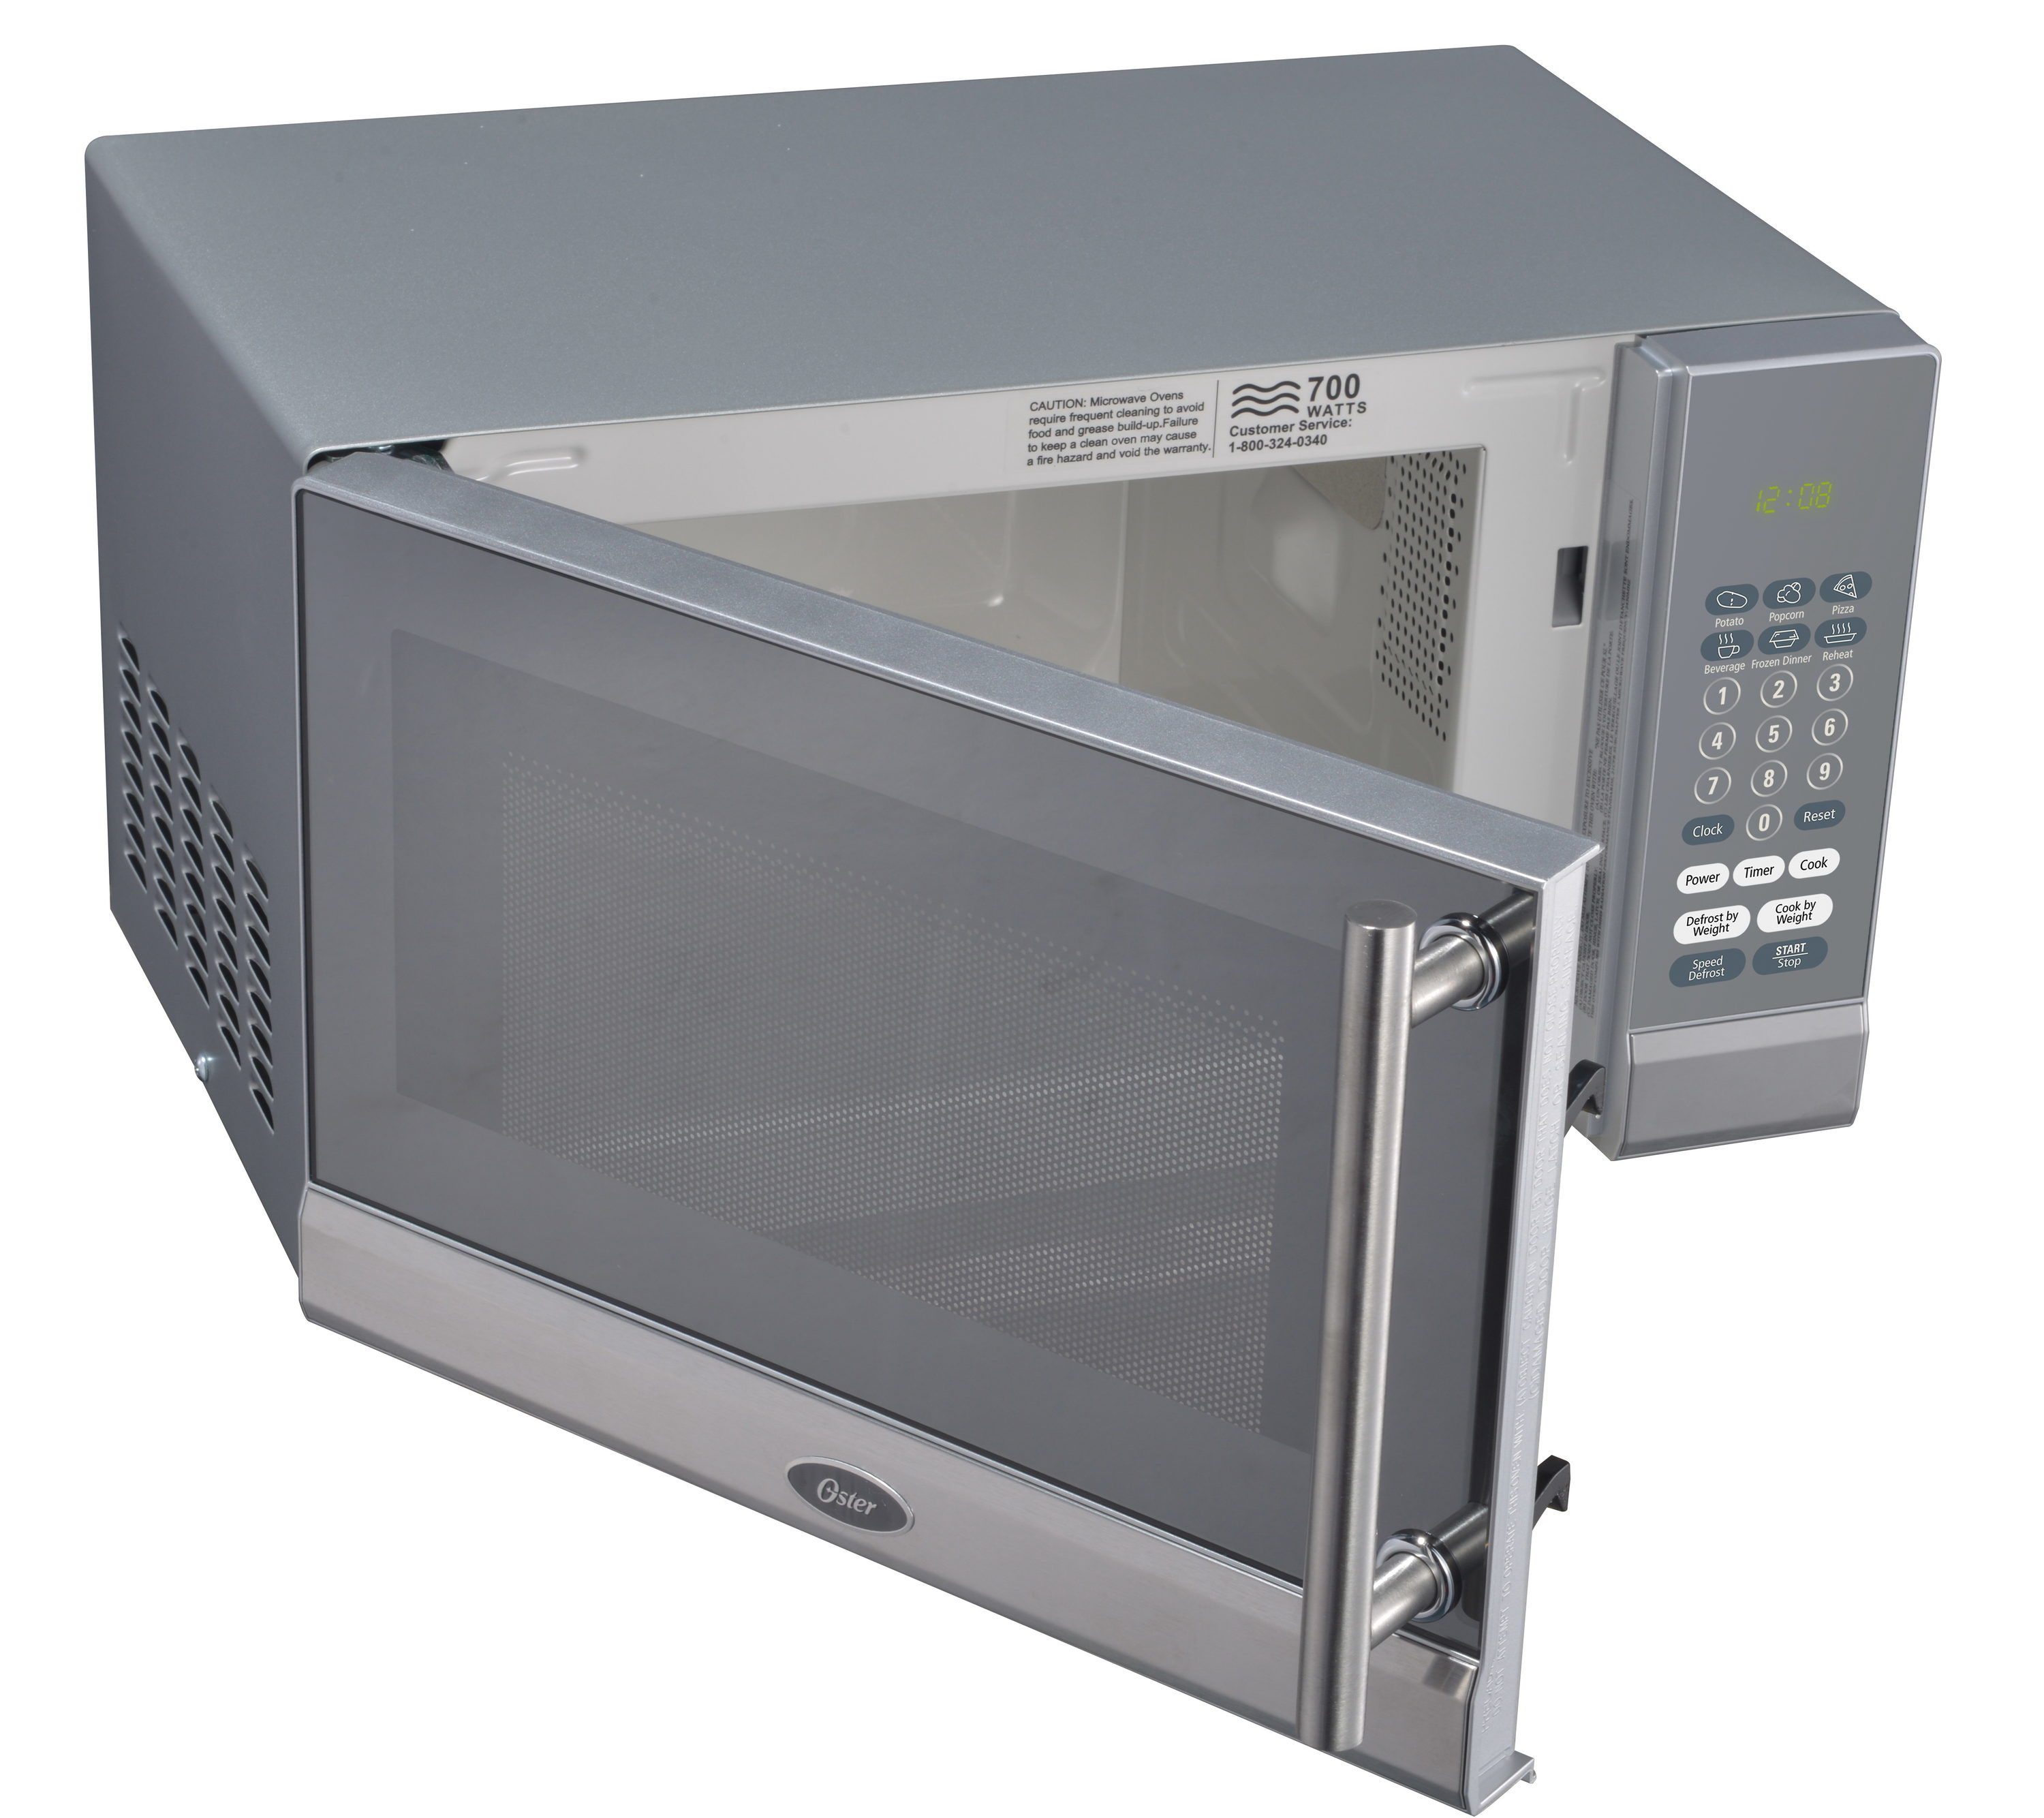 Oster's 900-Watt Countertop Microwave hits $40 shipped (Reg. $65+)